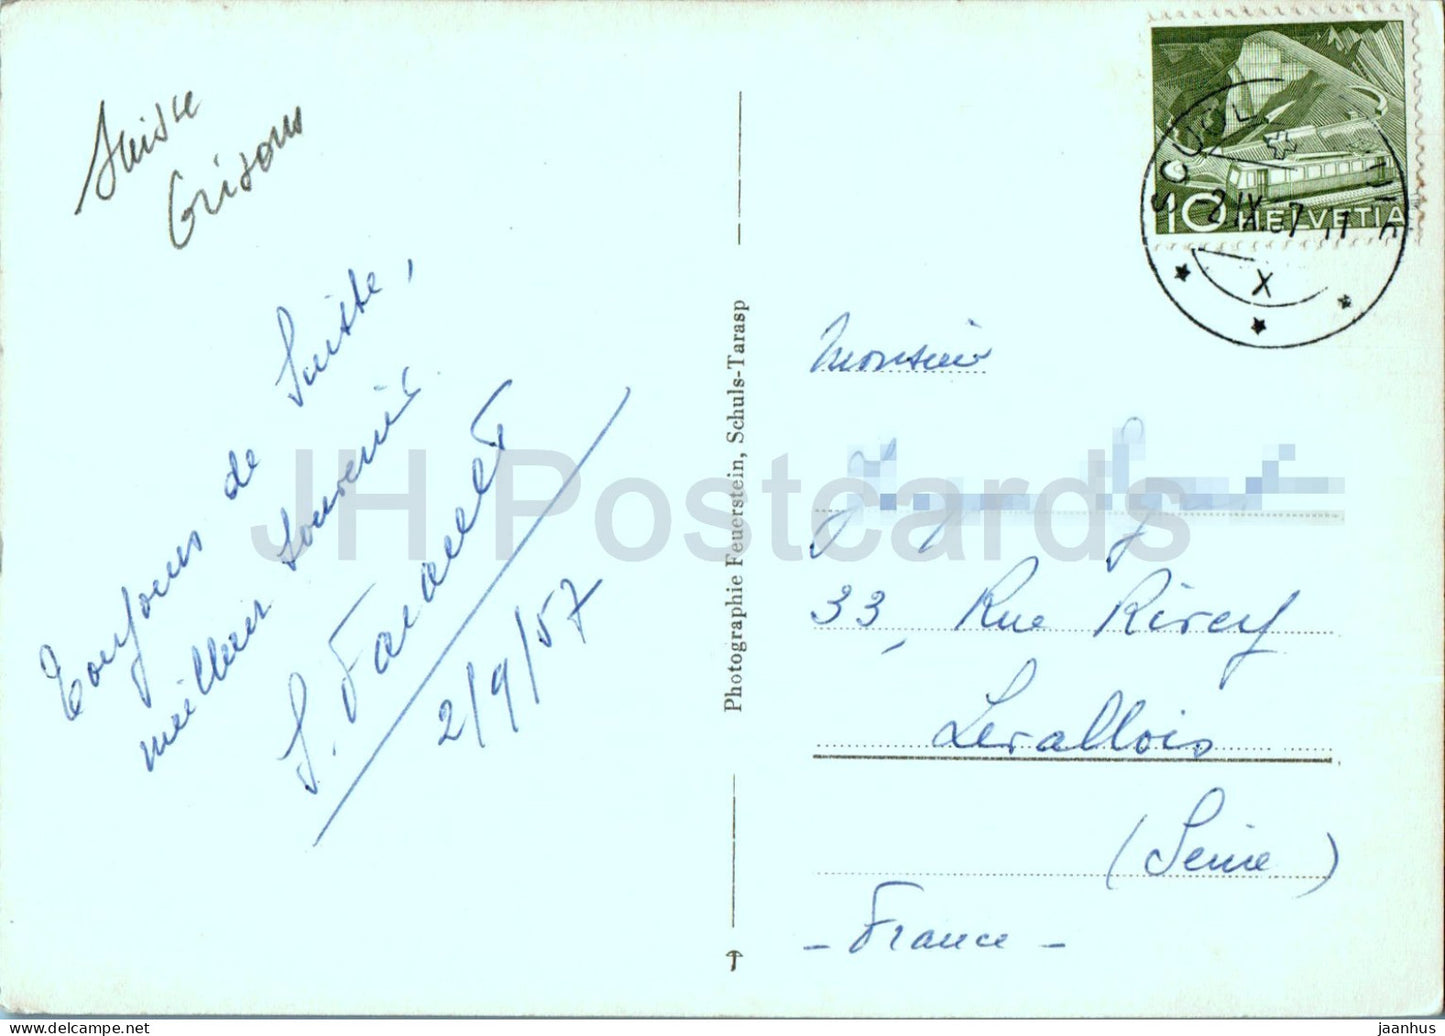 Piz Plavna - Val Minger - Nationalpark - 1069 - alte Postkarte - 1957 - Schweiz - gebraucht 